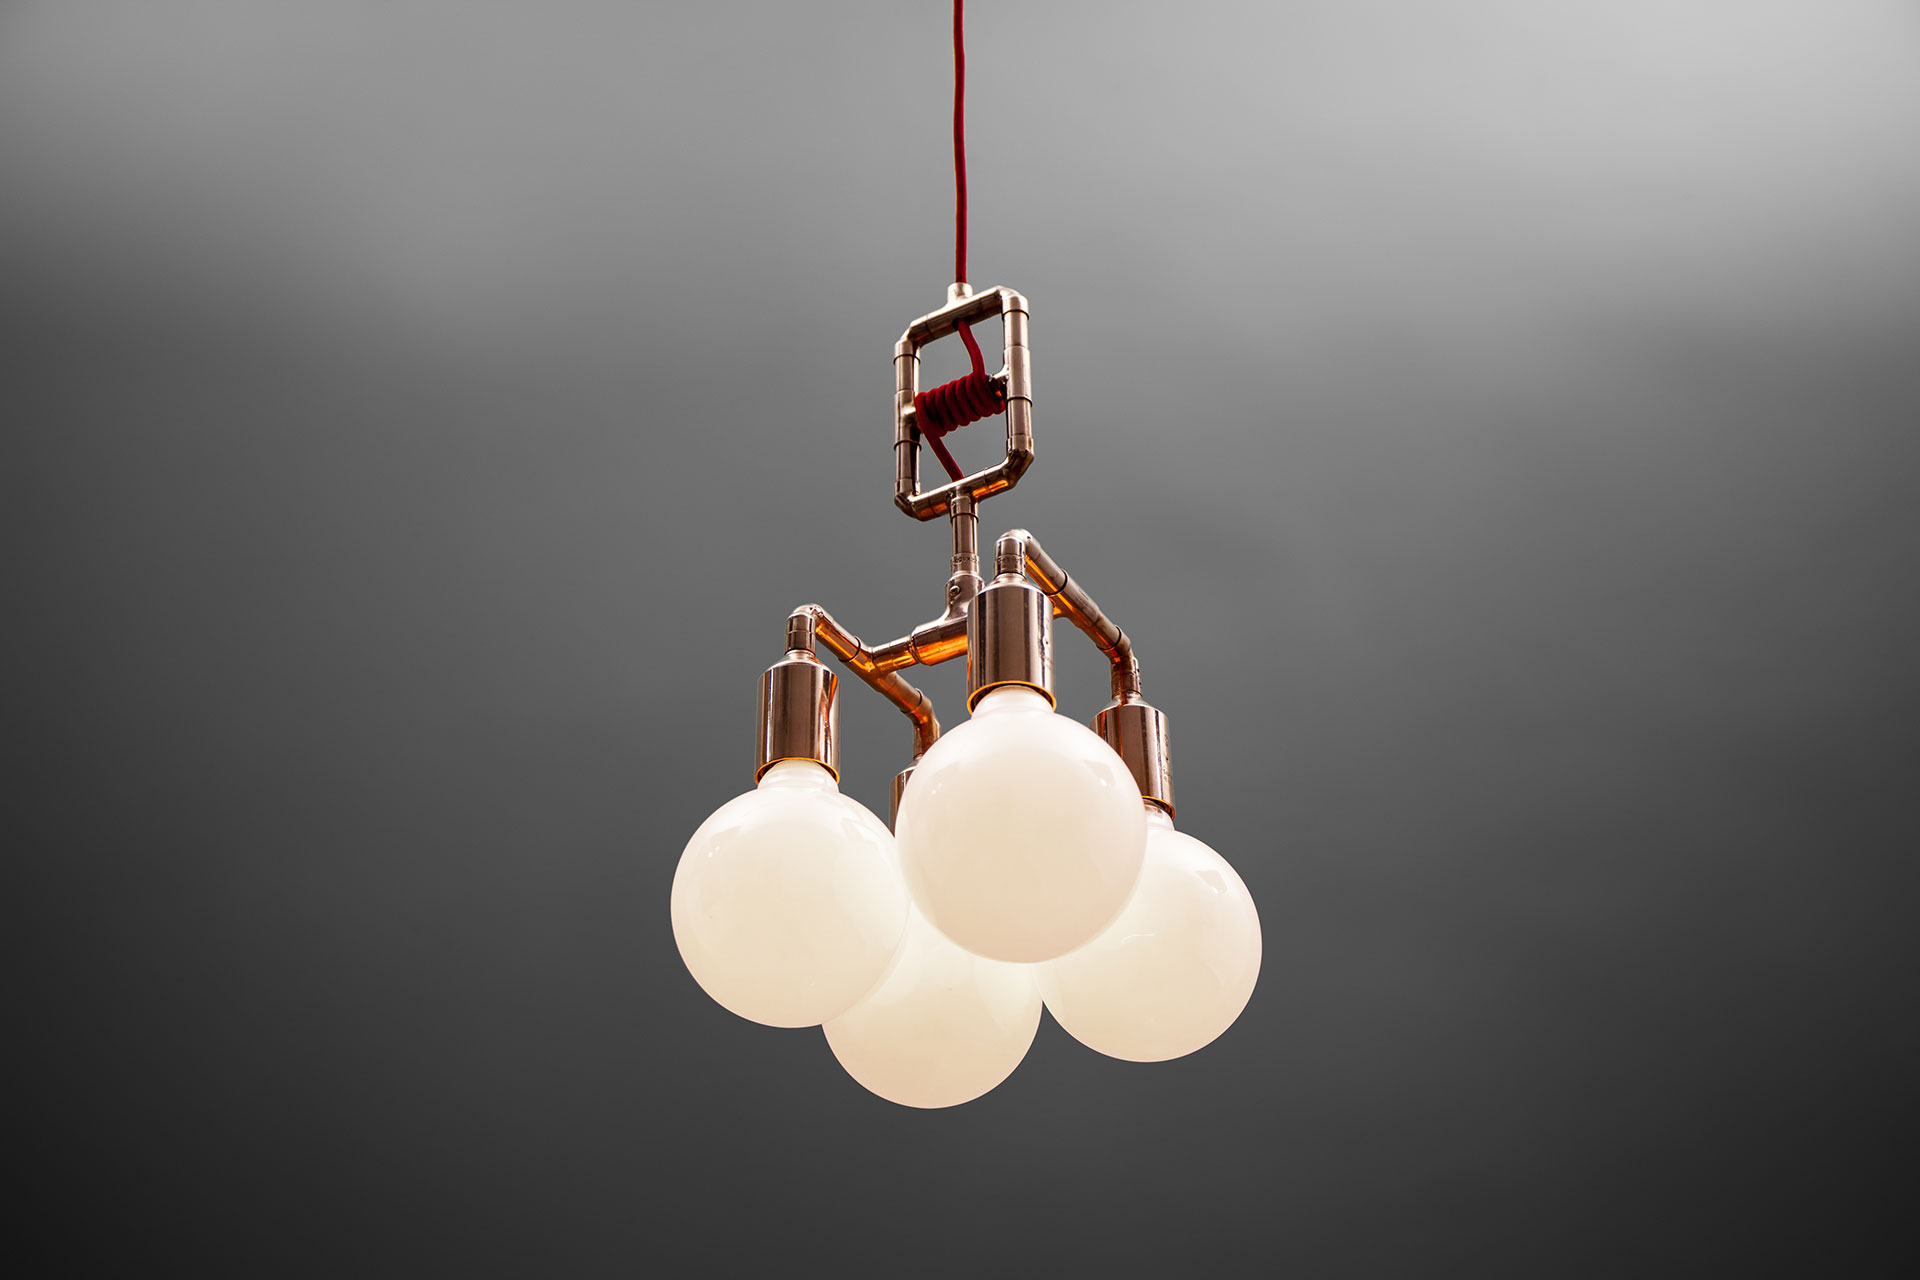 Industrial design 4 lights chandelier in copper or brass